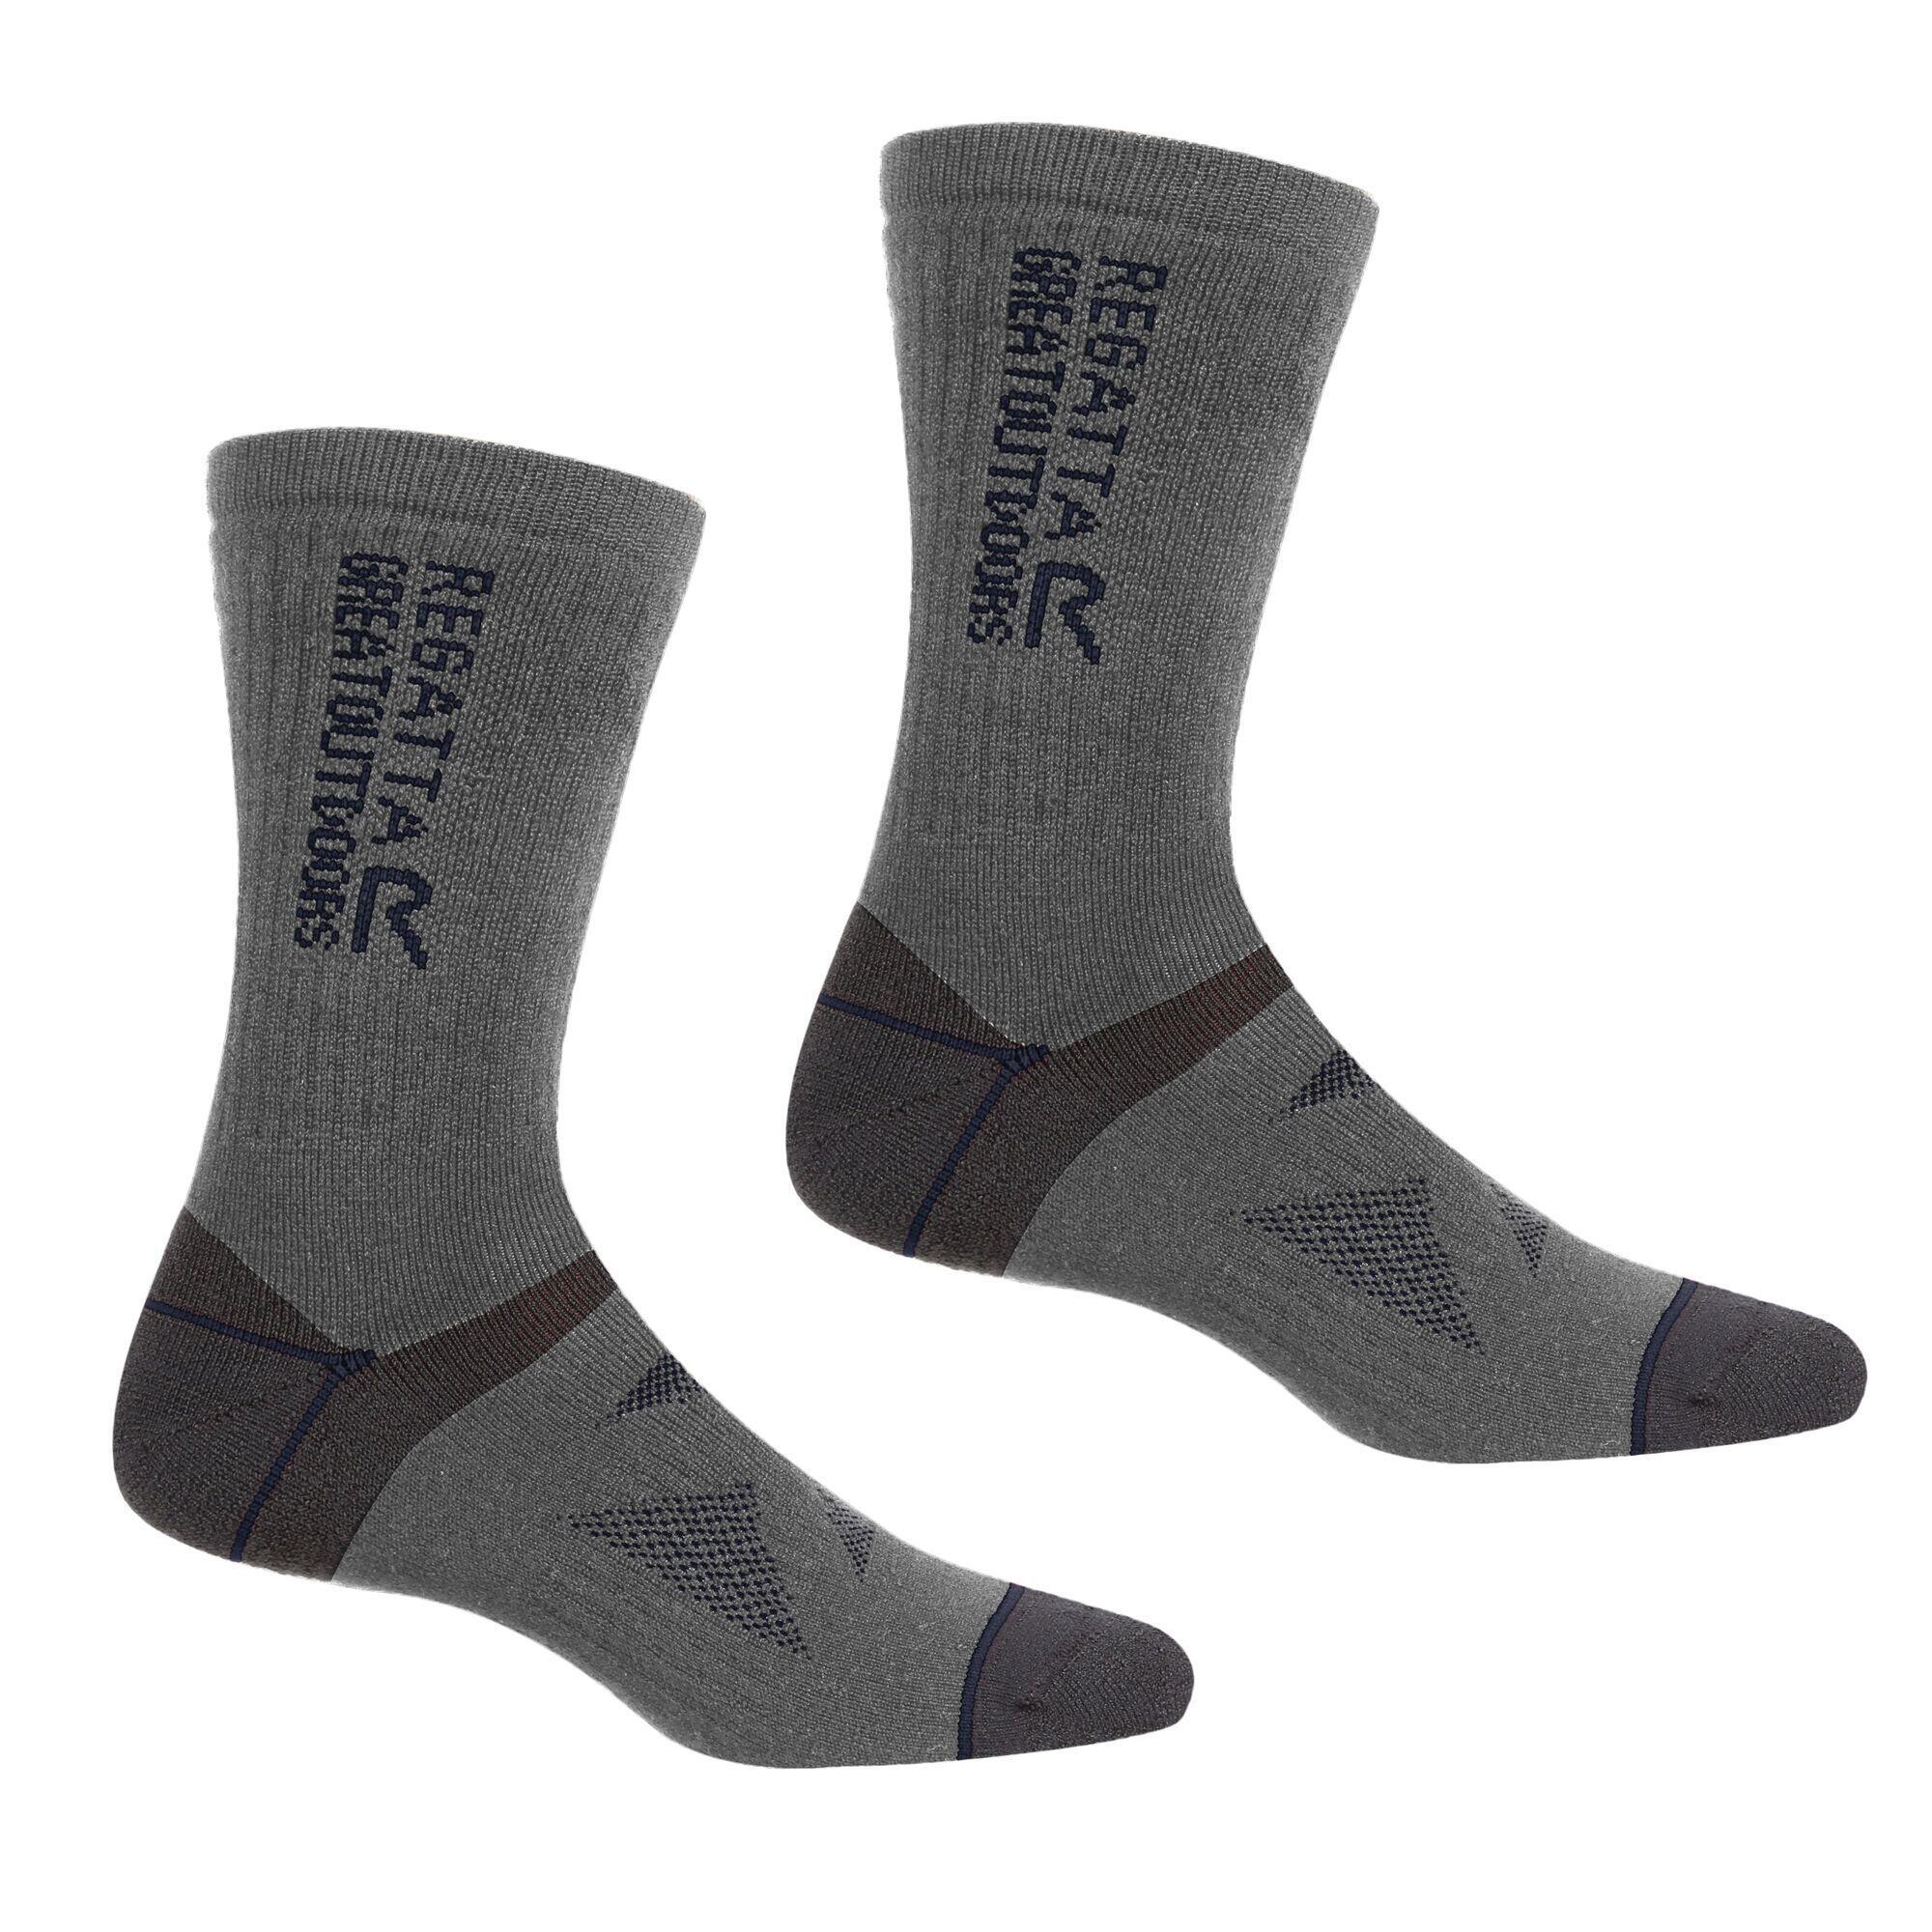 REGATTA Unisex Adult Wool Hiking Boot Socks (Pack of 2) (Briar Grey/Navy)